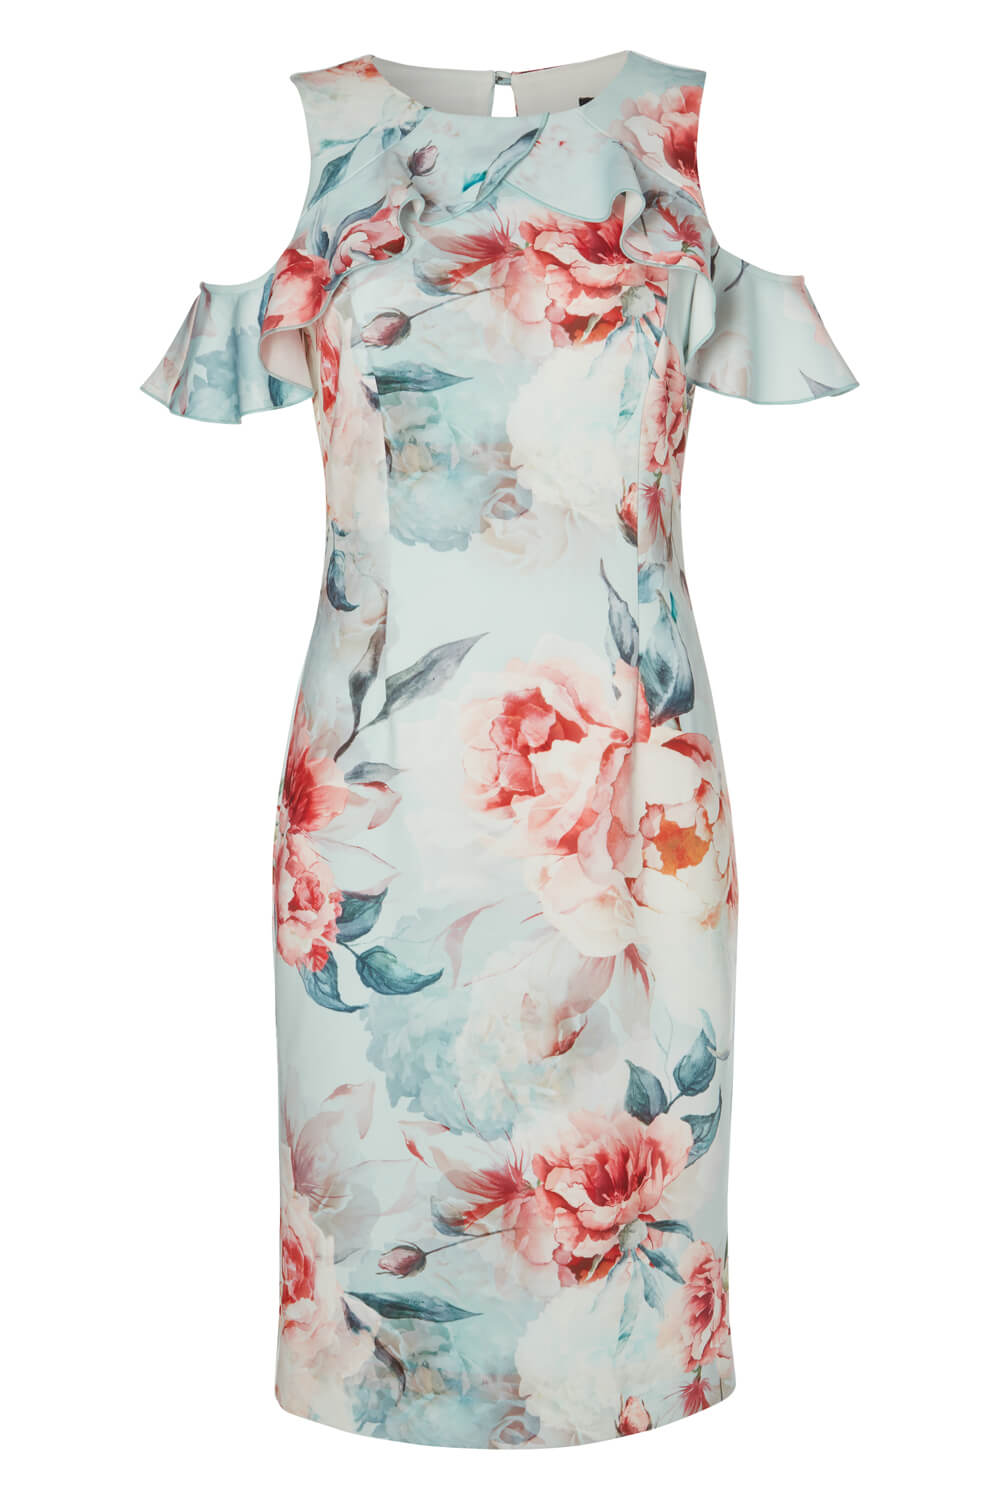 Mint Floral Ruffle Cold Shoulder Scuba Dress, Image 4 of 4